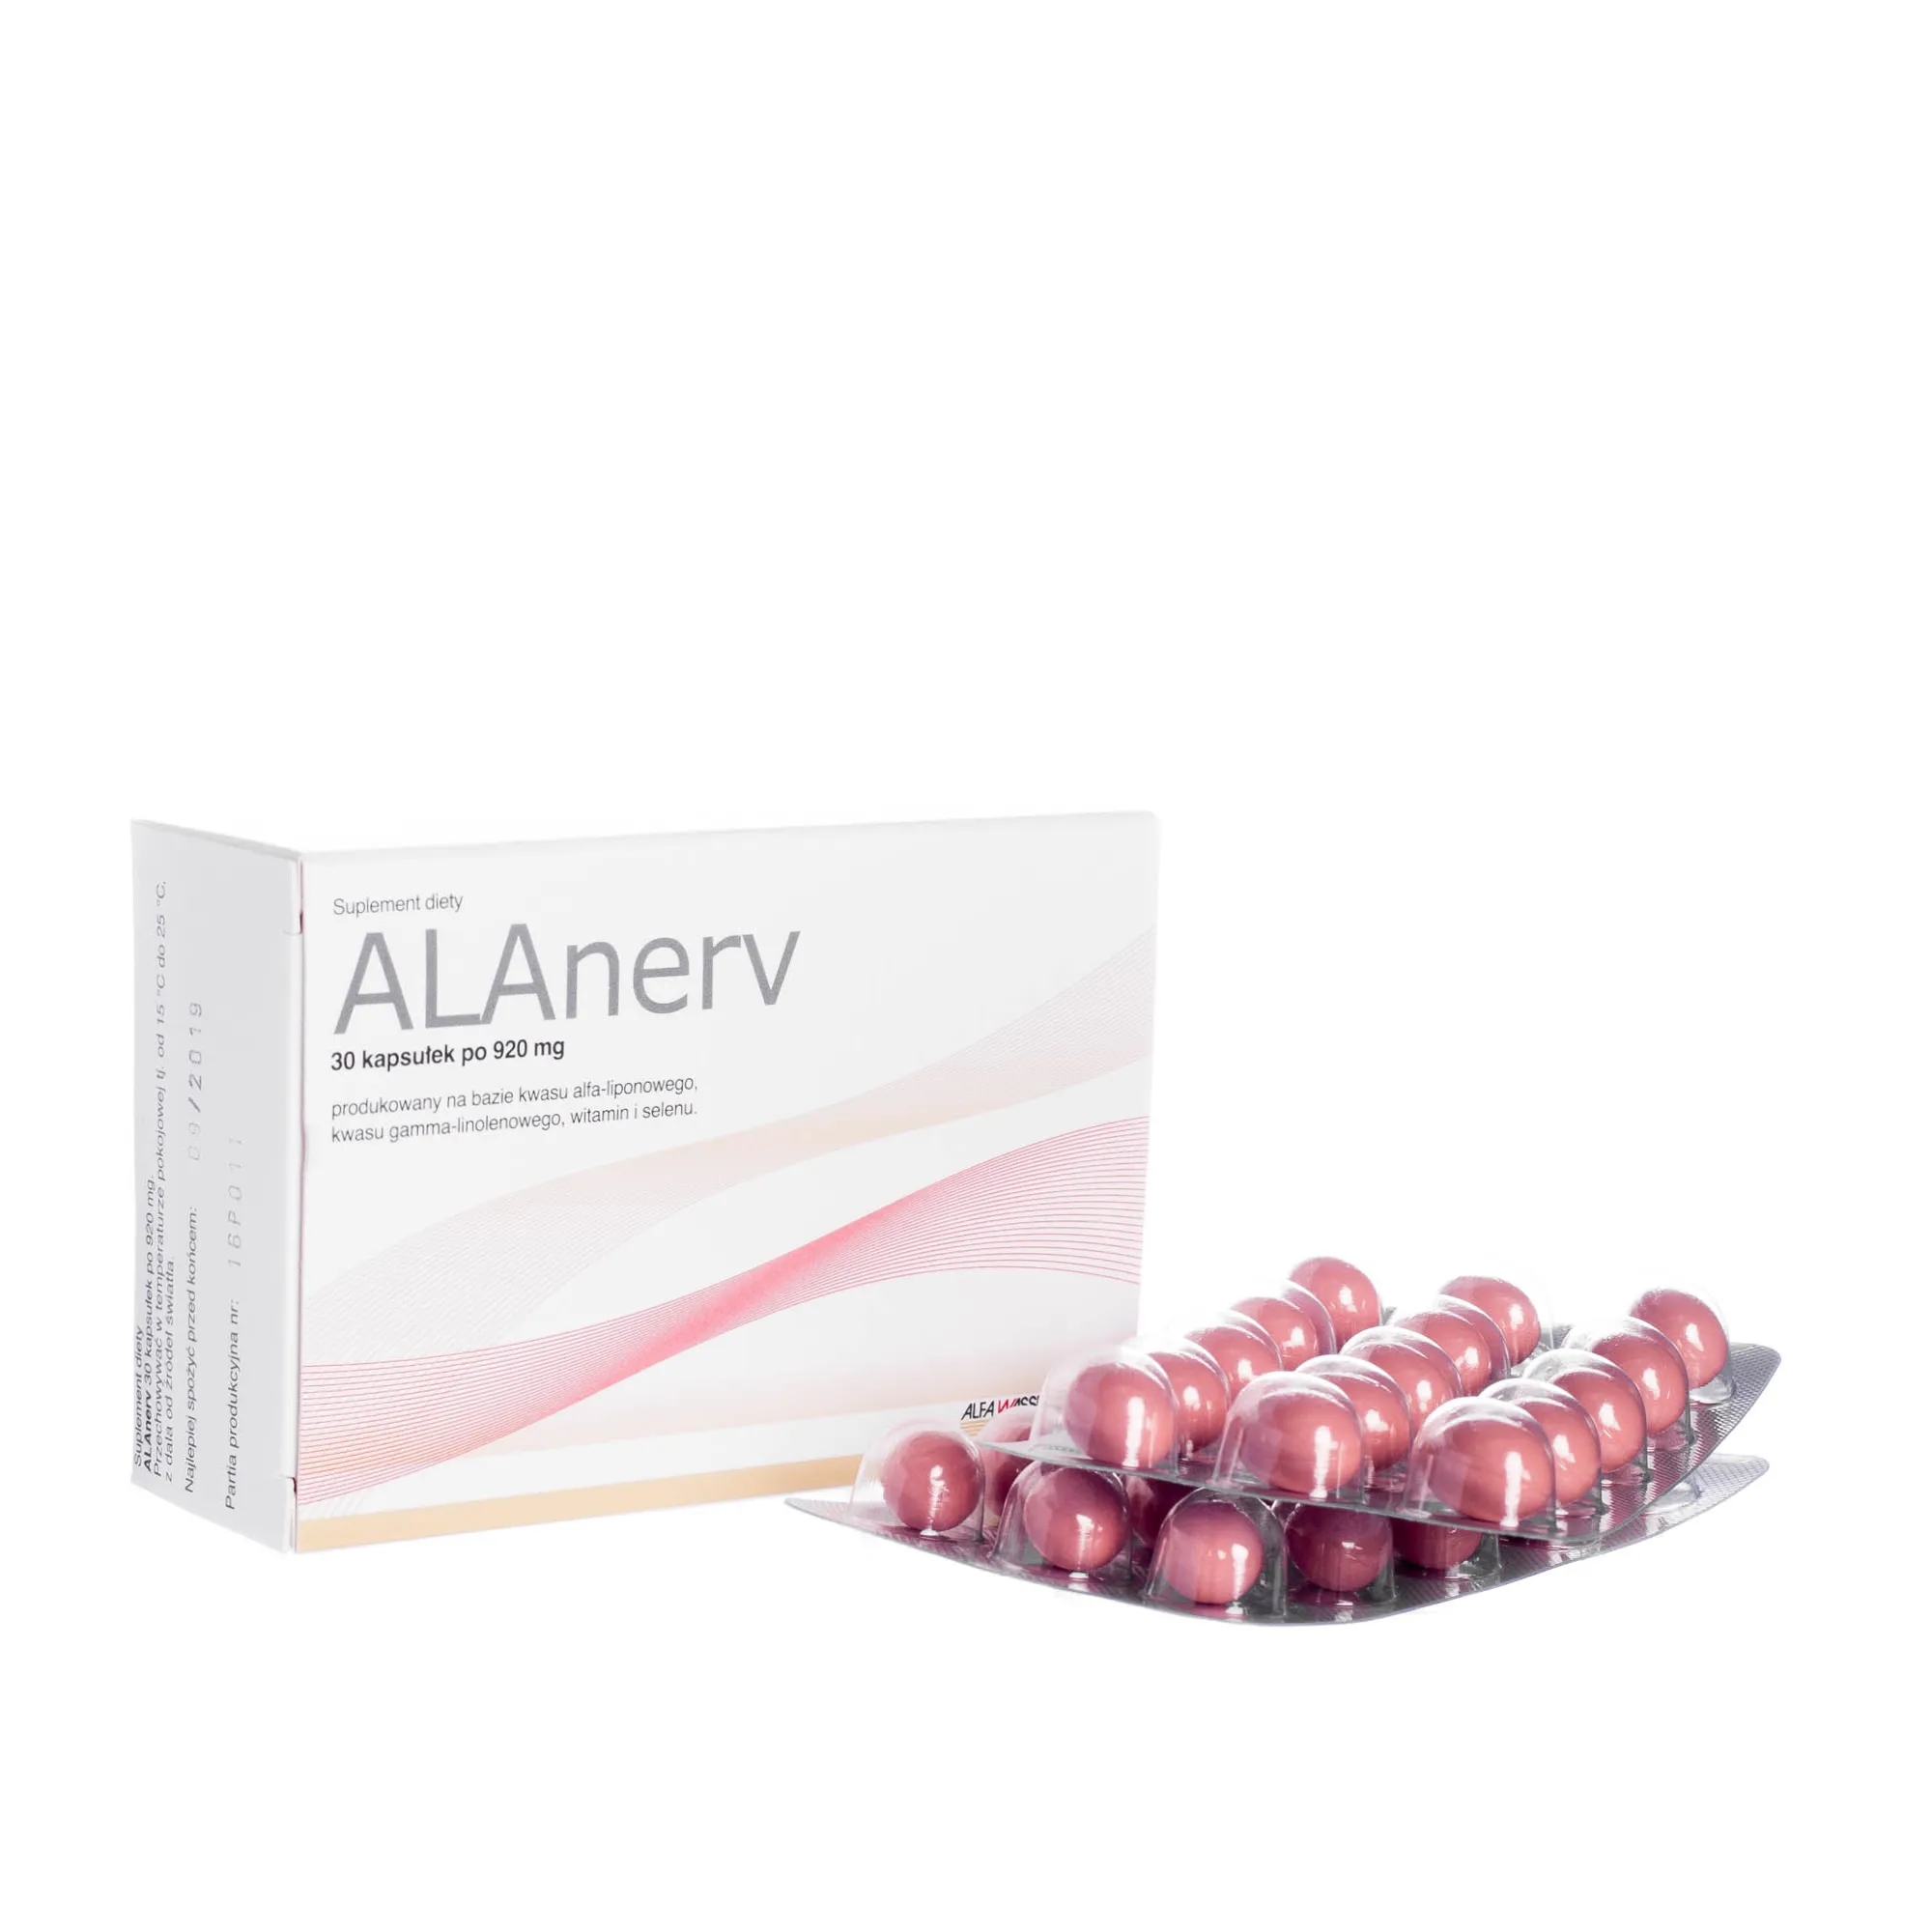 ALAnerv - suplement diety, 30 kapsułek 